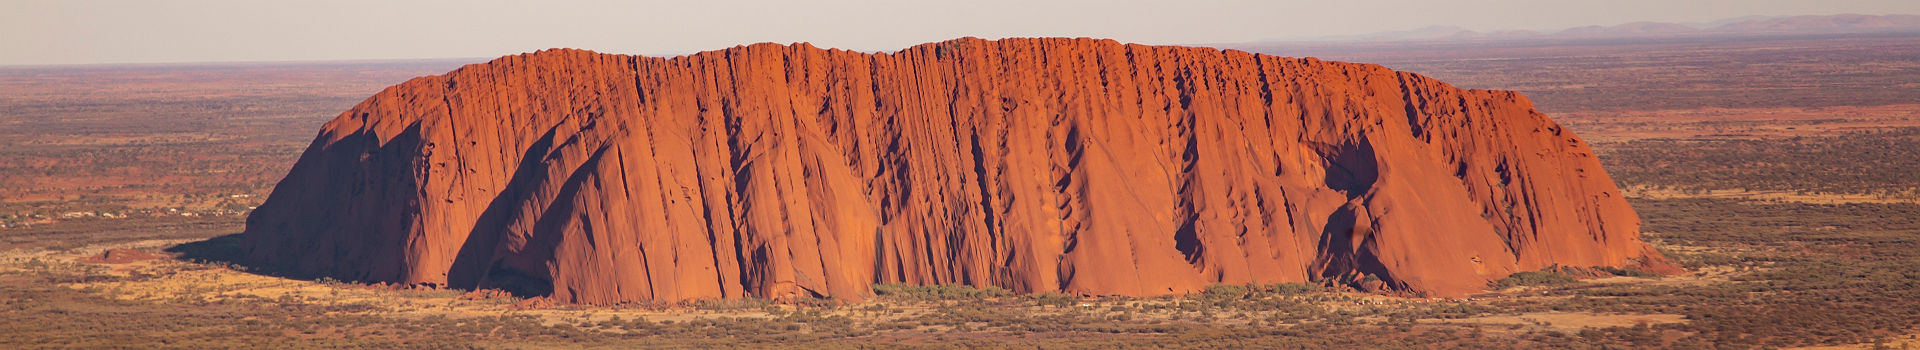 Uluru - Ayers Rock - Tourism Australia